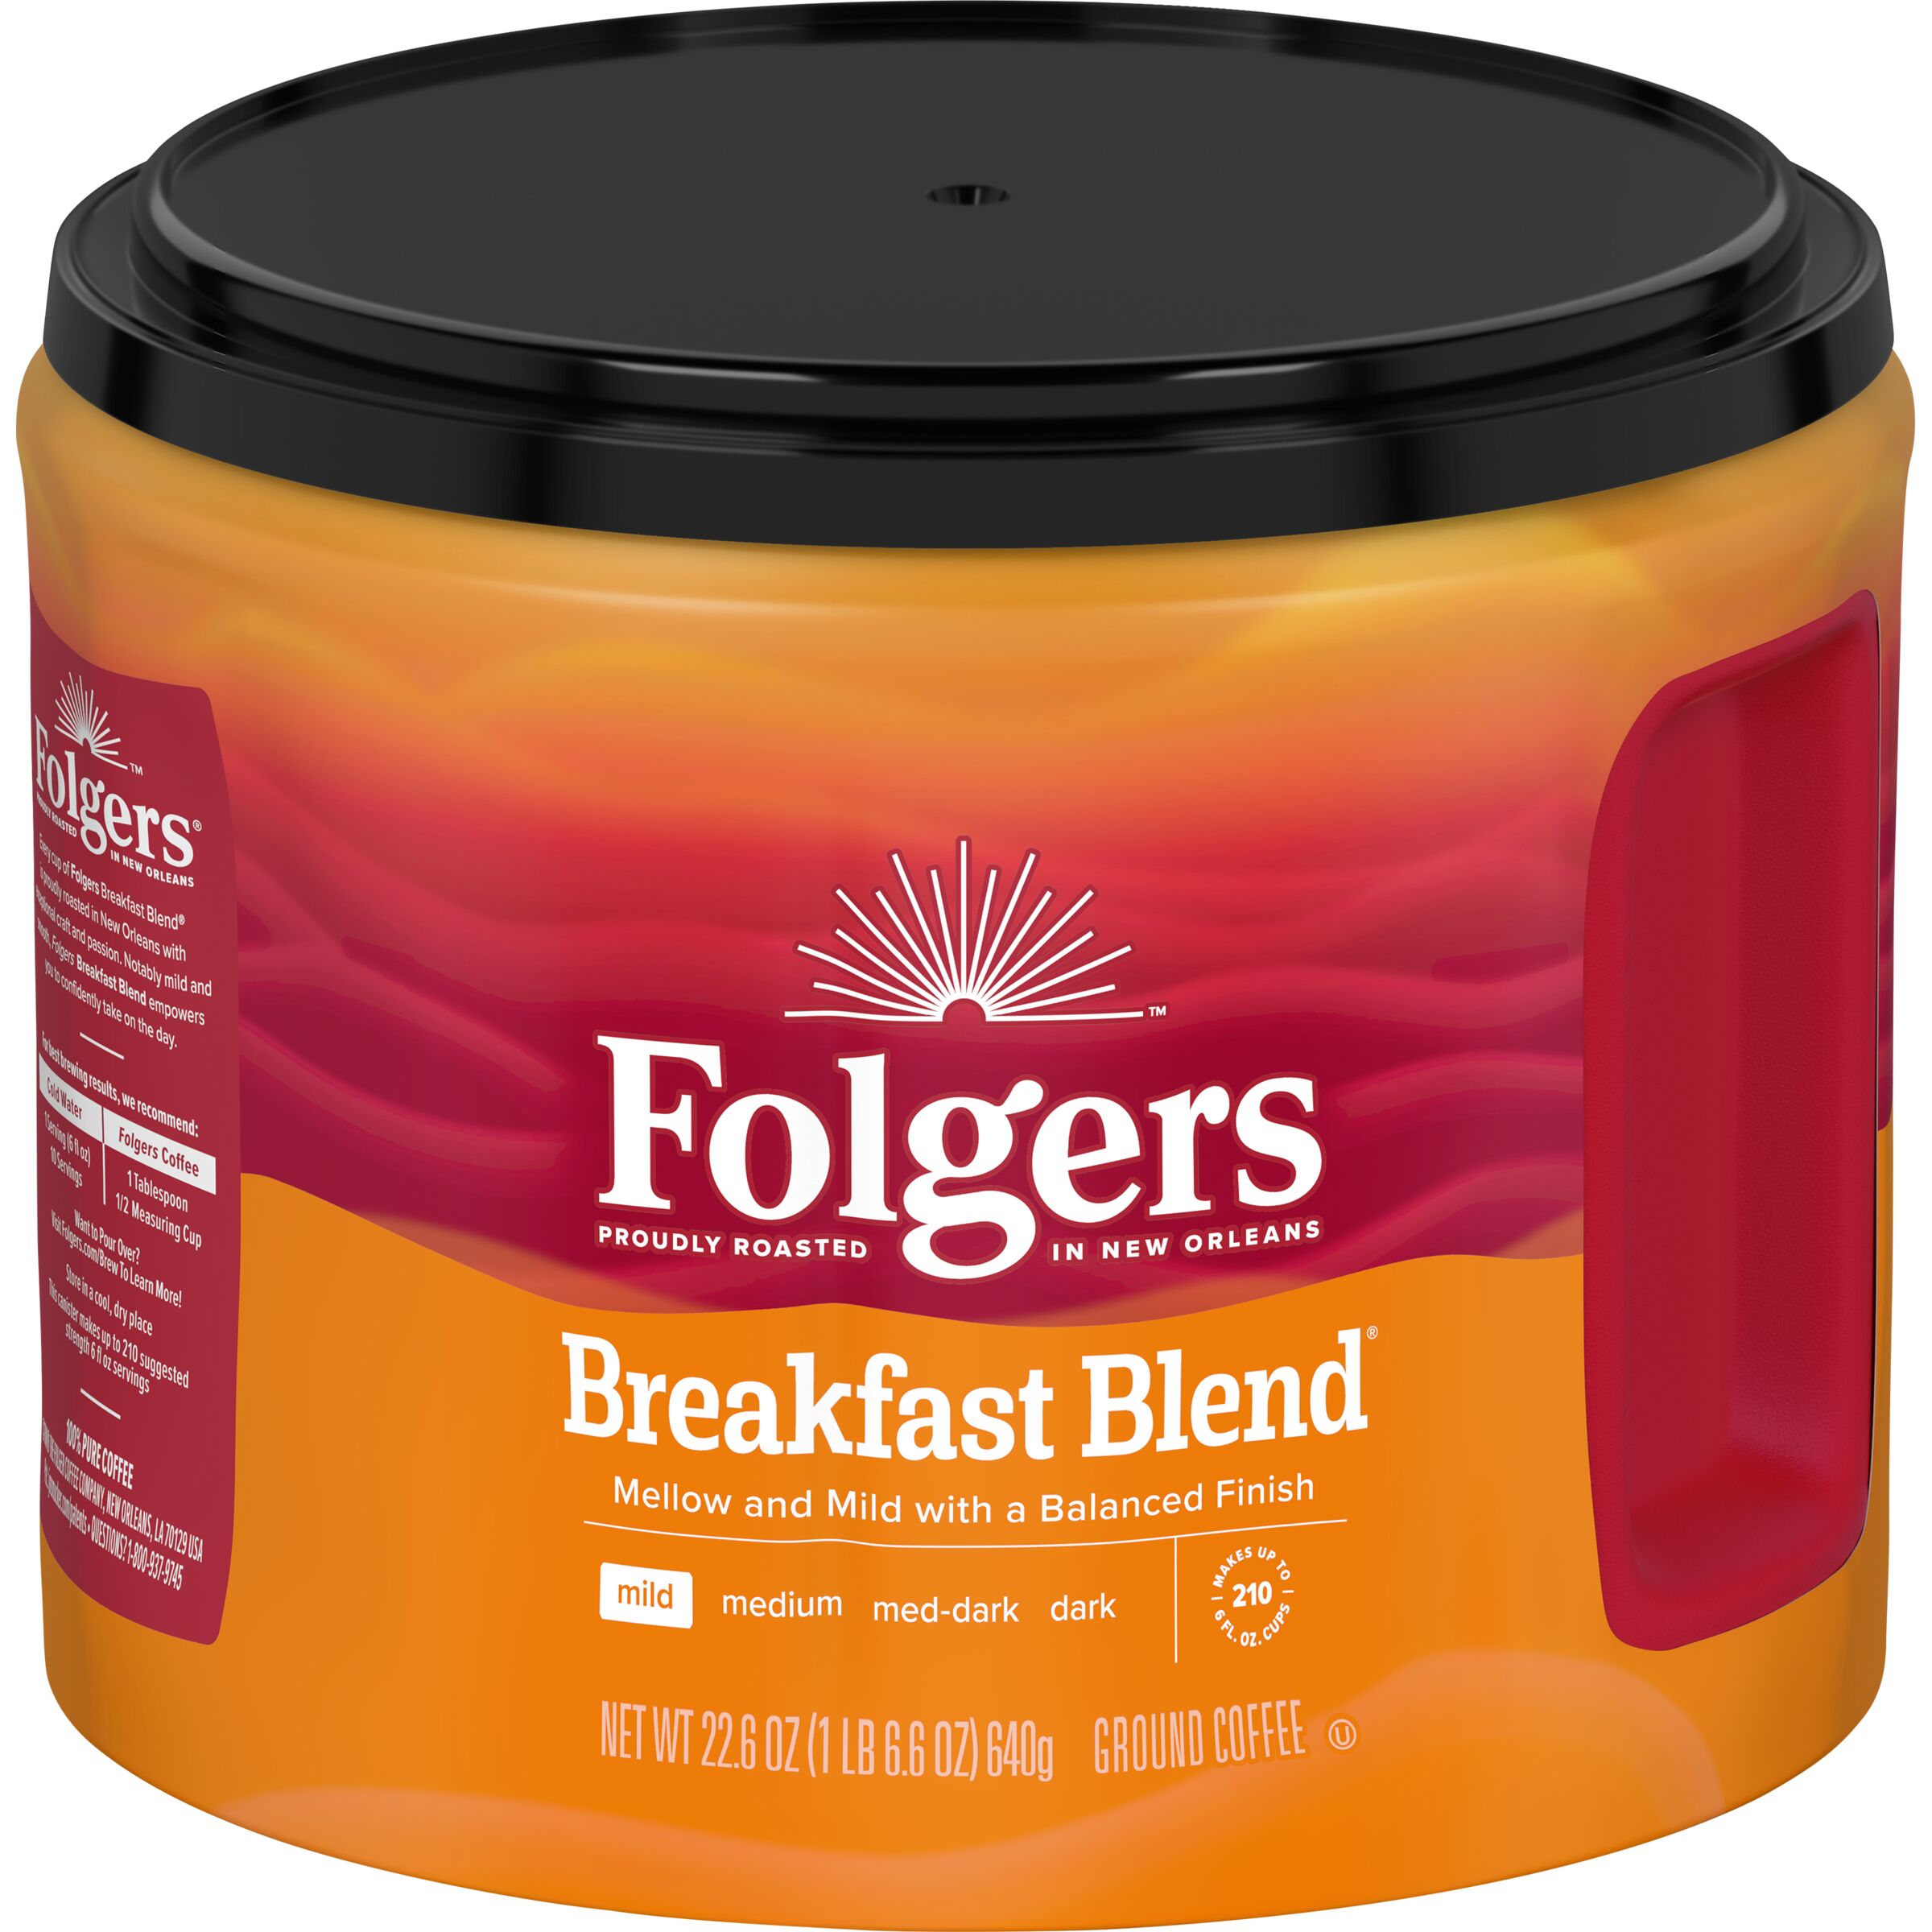 Folgers Breakfast Blend, Smooth & Mild Ground Coffee